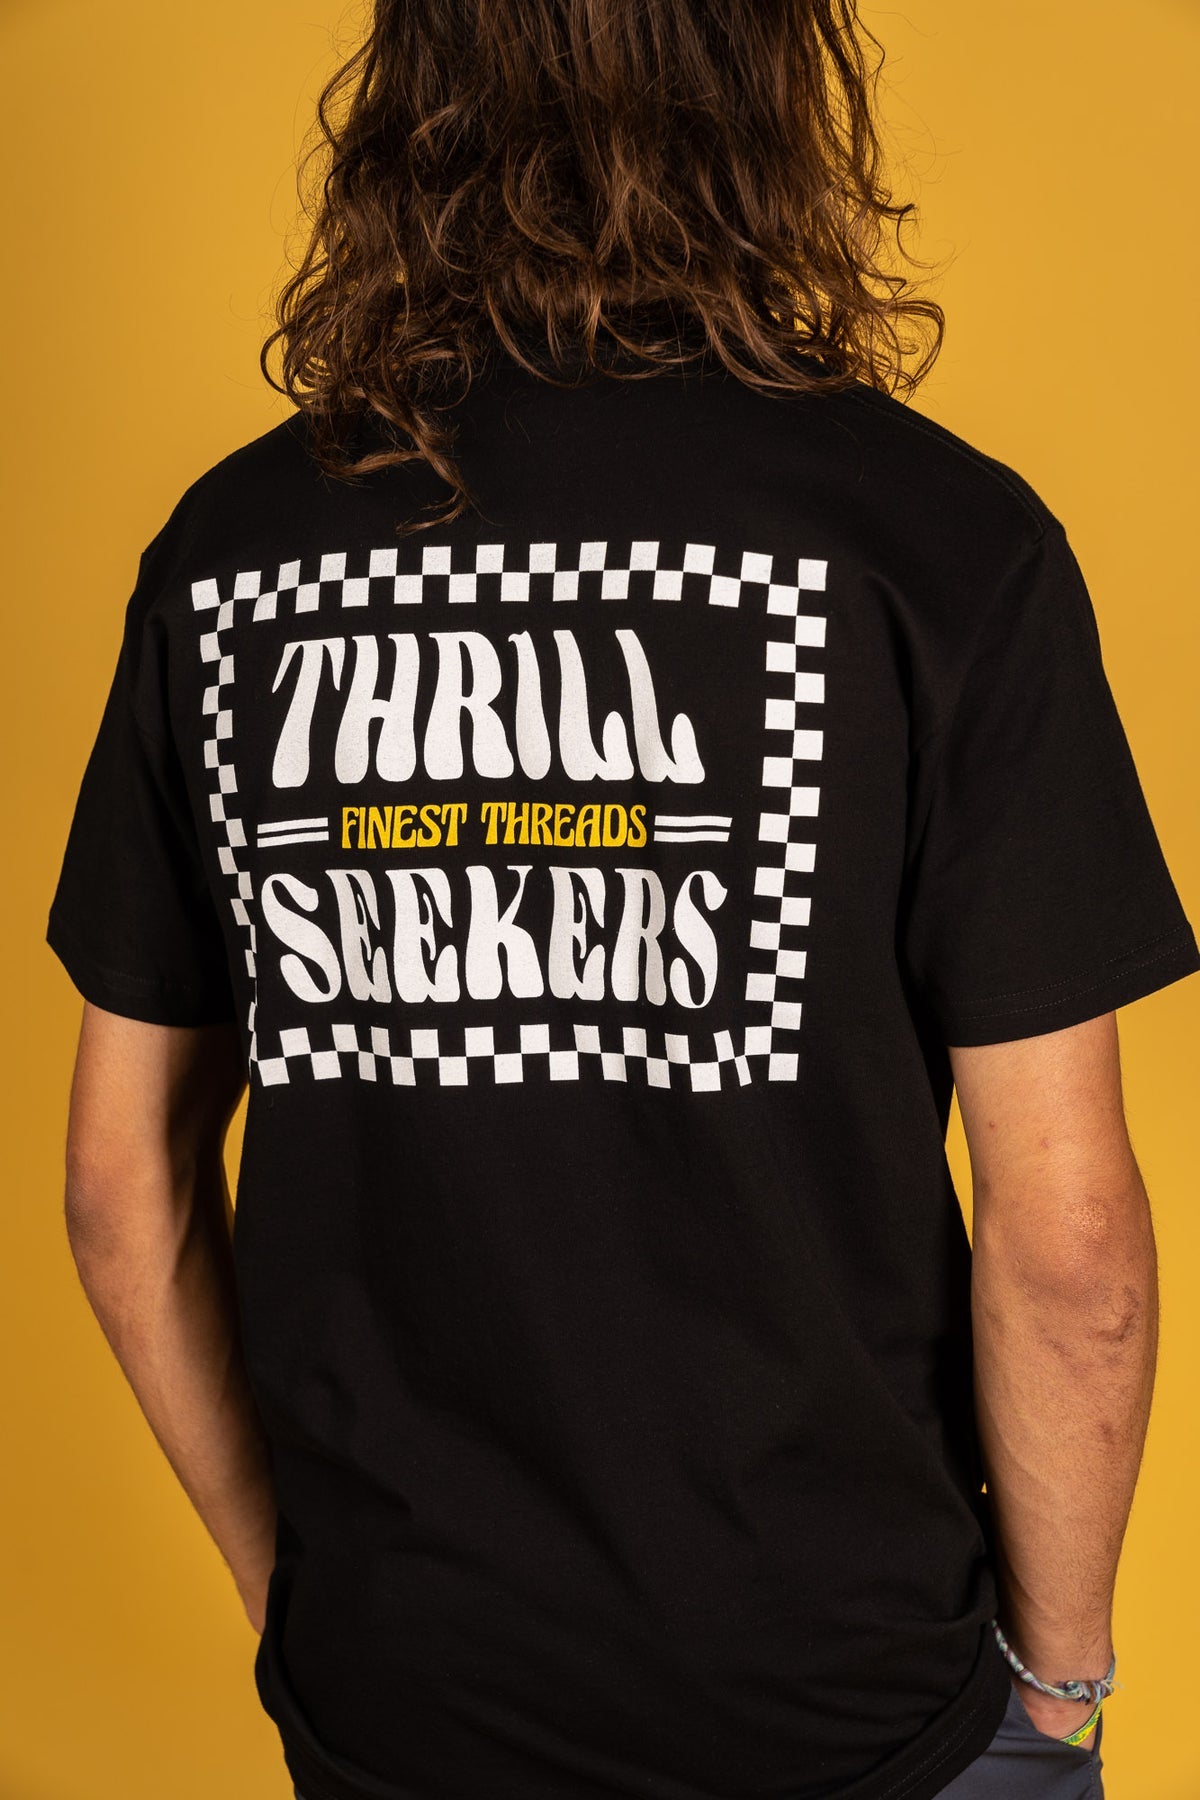 Thrill Seekers - Finest Threads Tee - Black